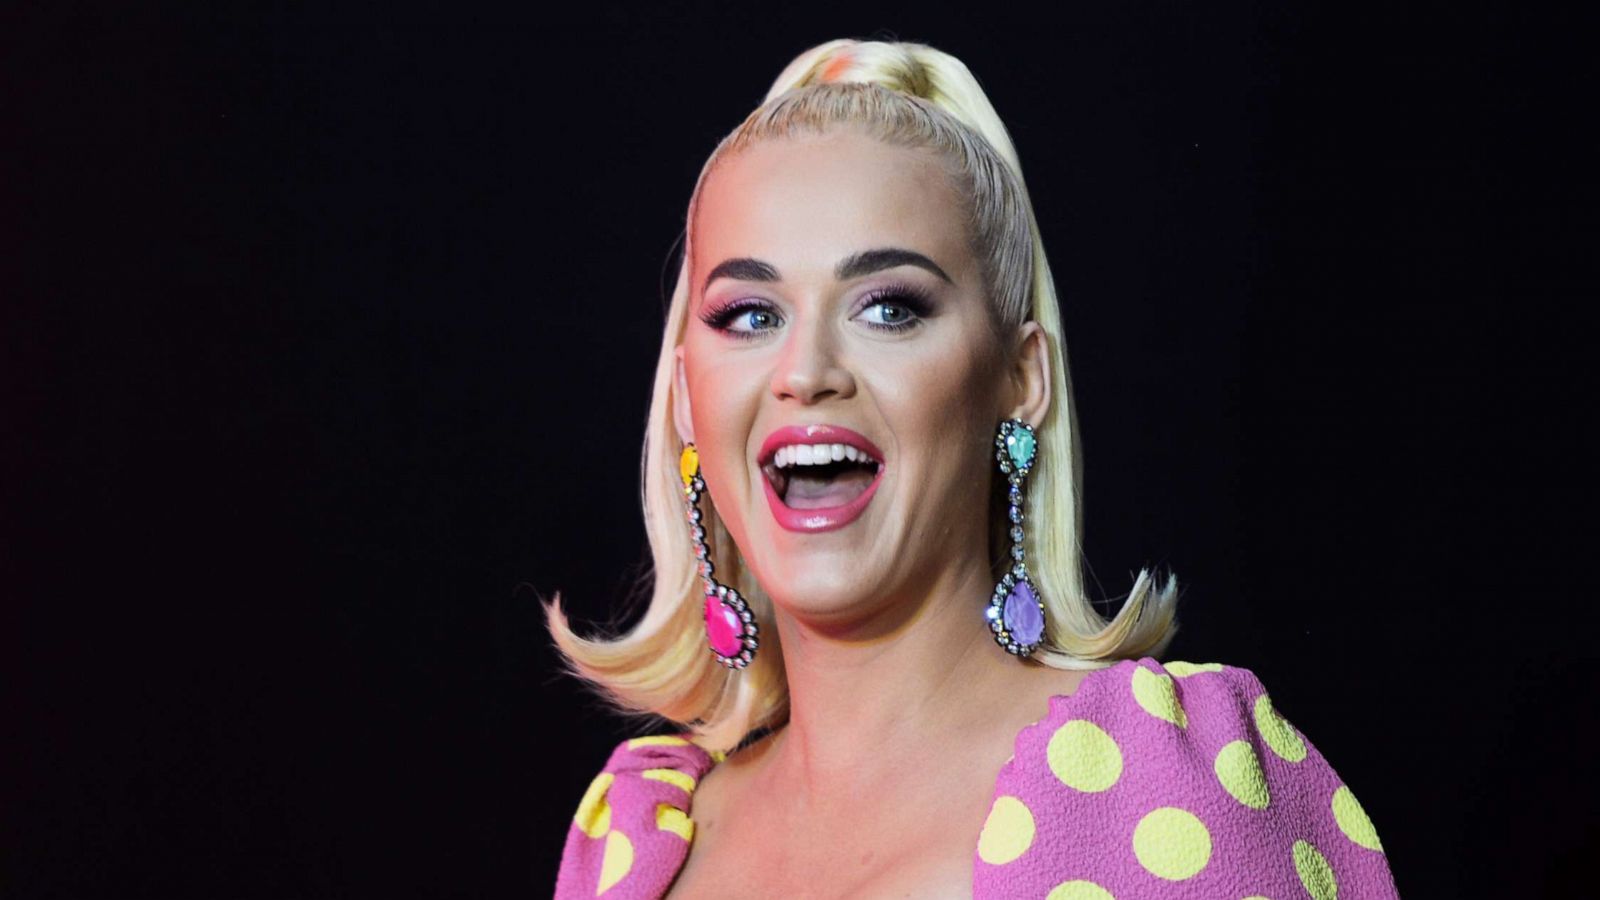 Katy Perry Shows Postpartum Body in Bra and Undies Selfie Days After Birth